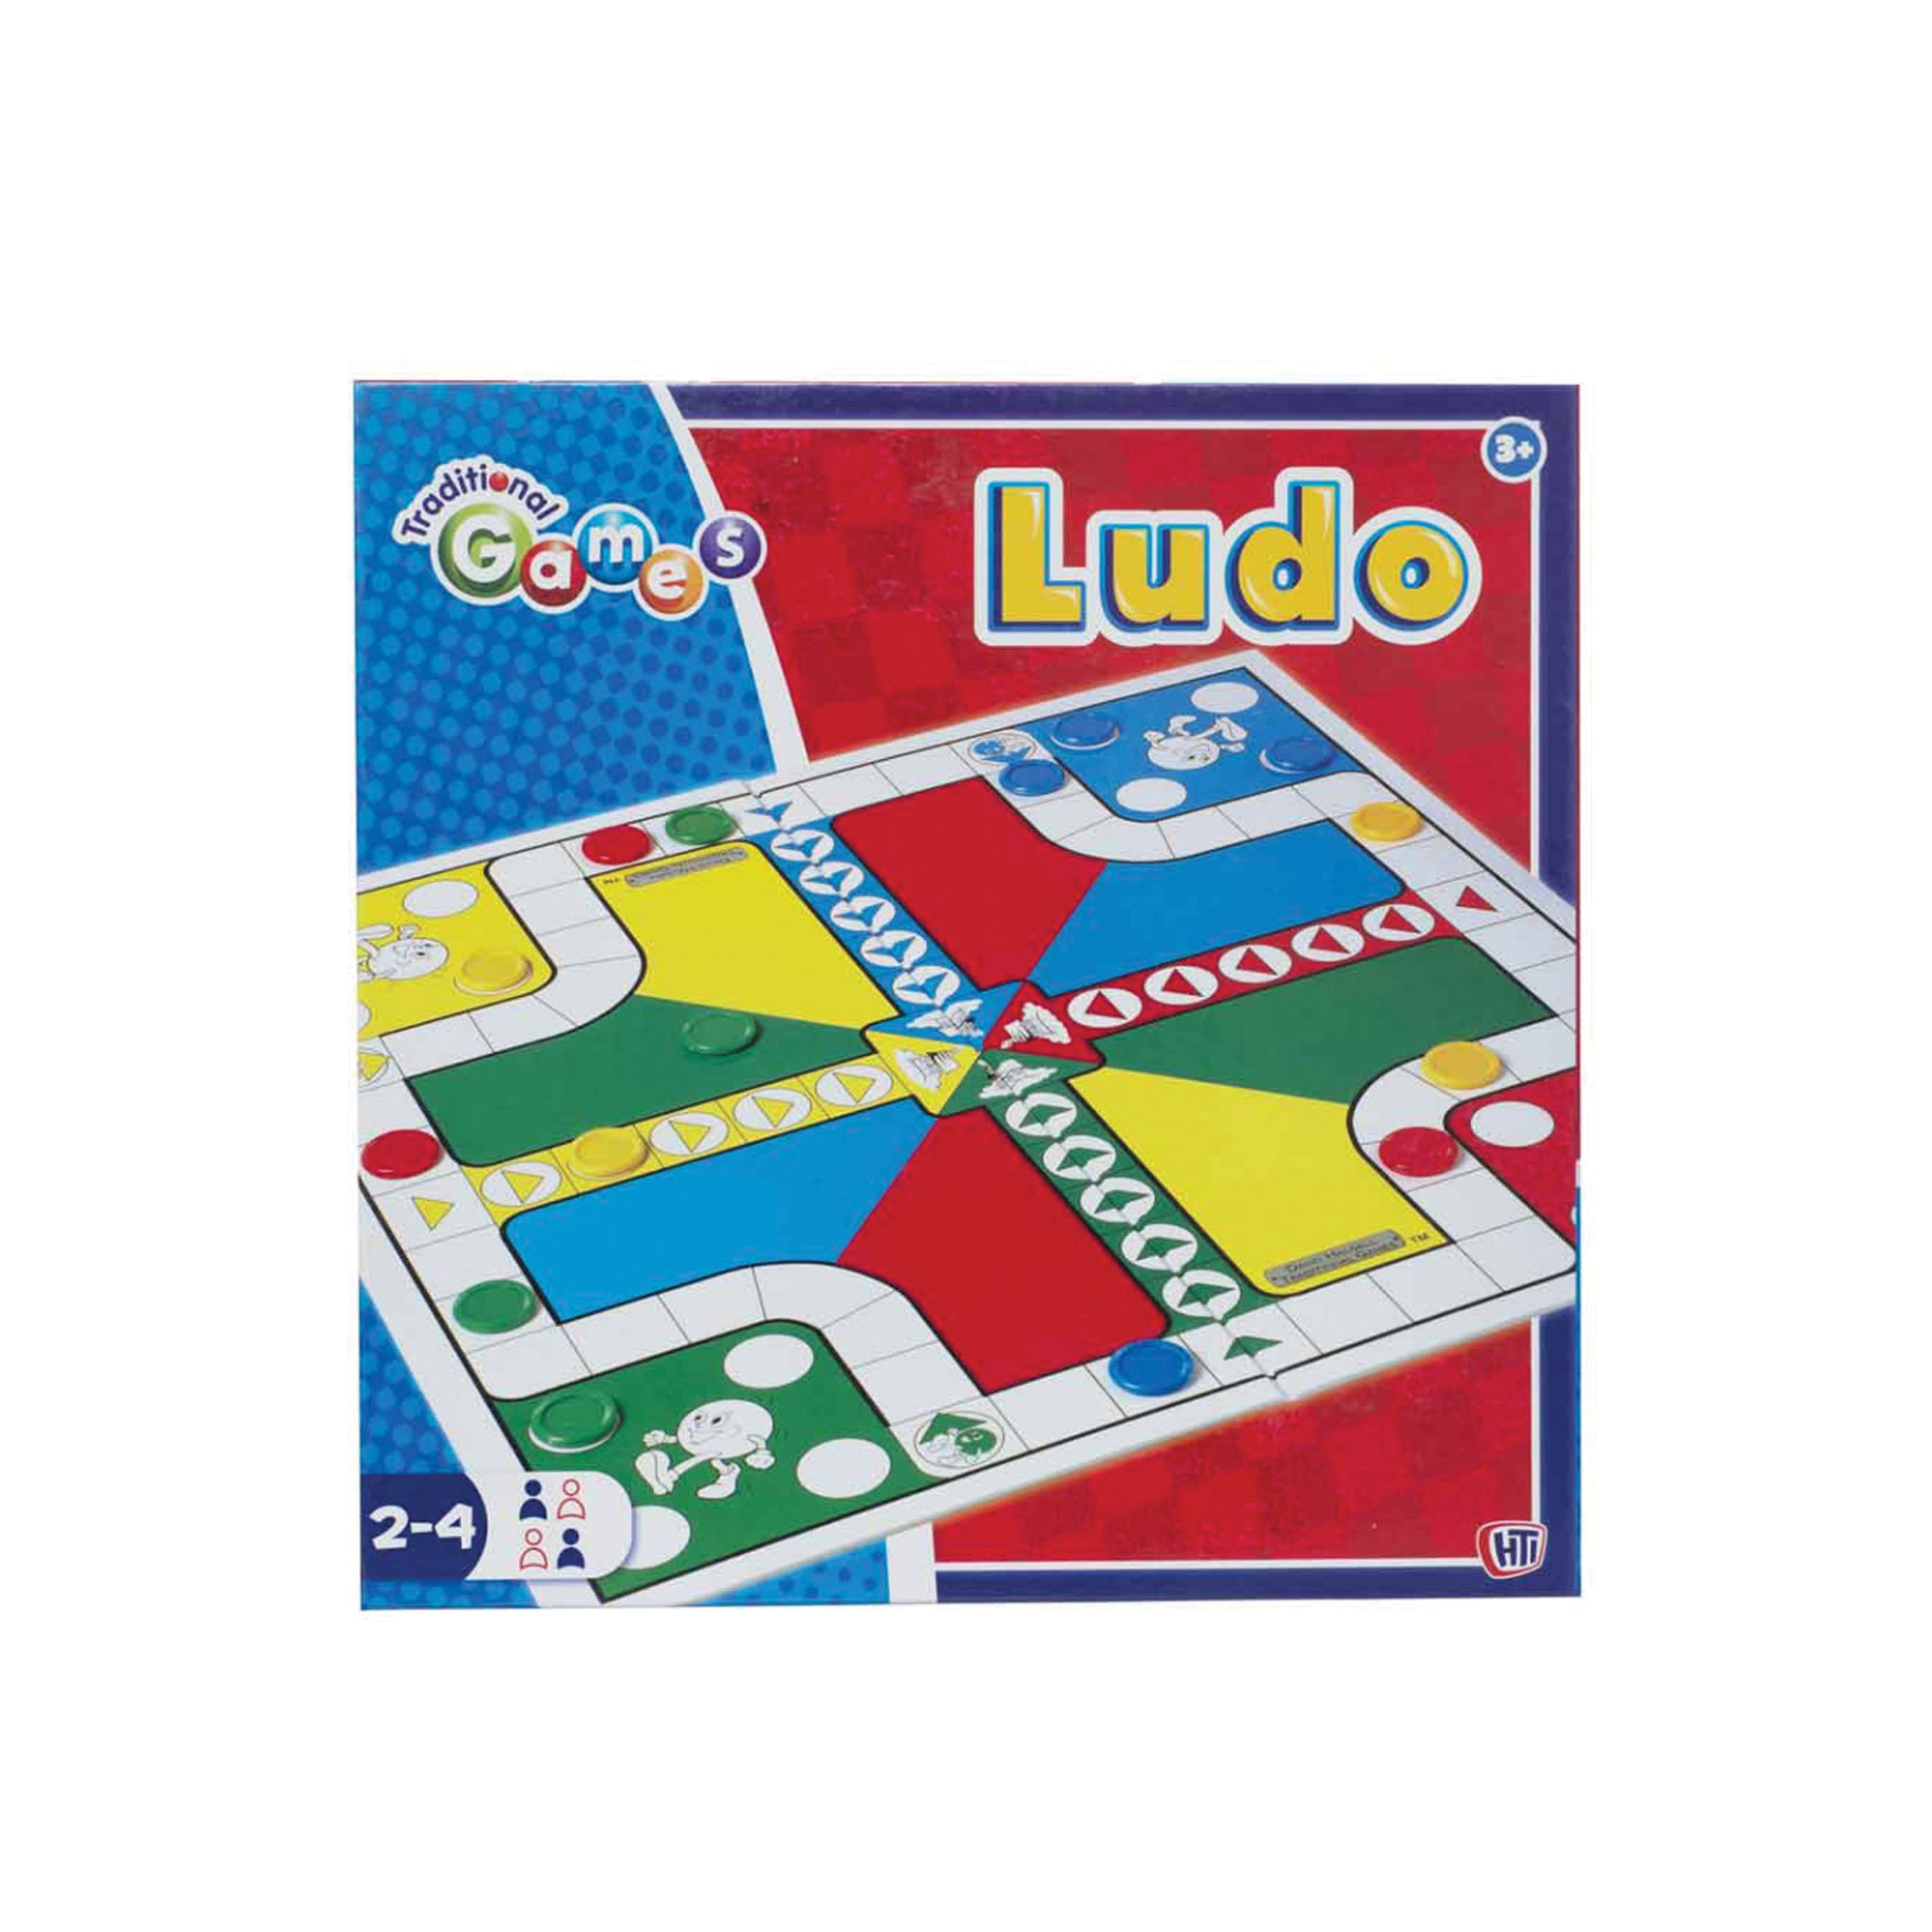 Ludo Board Game - Each